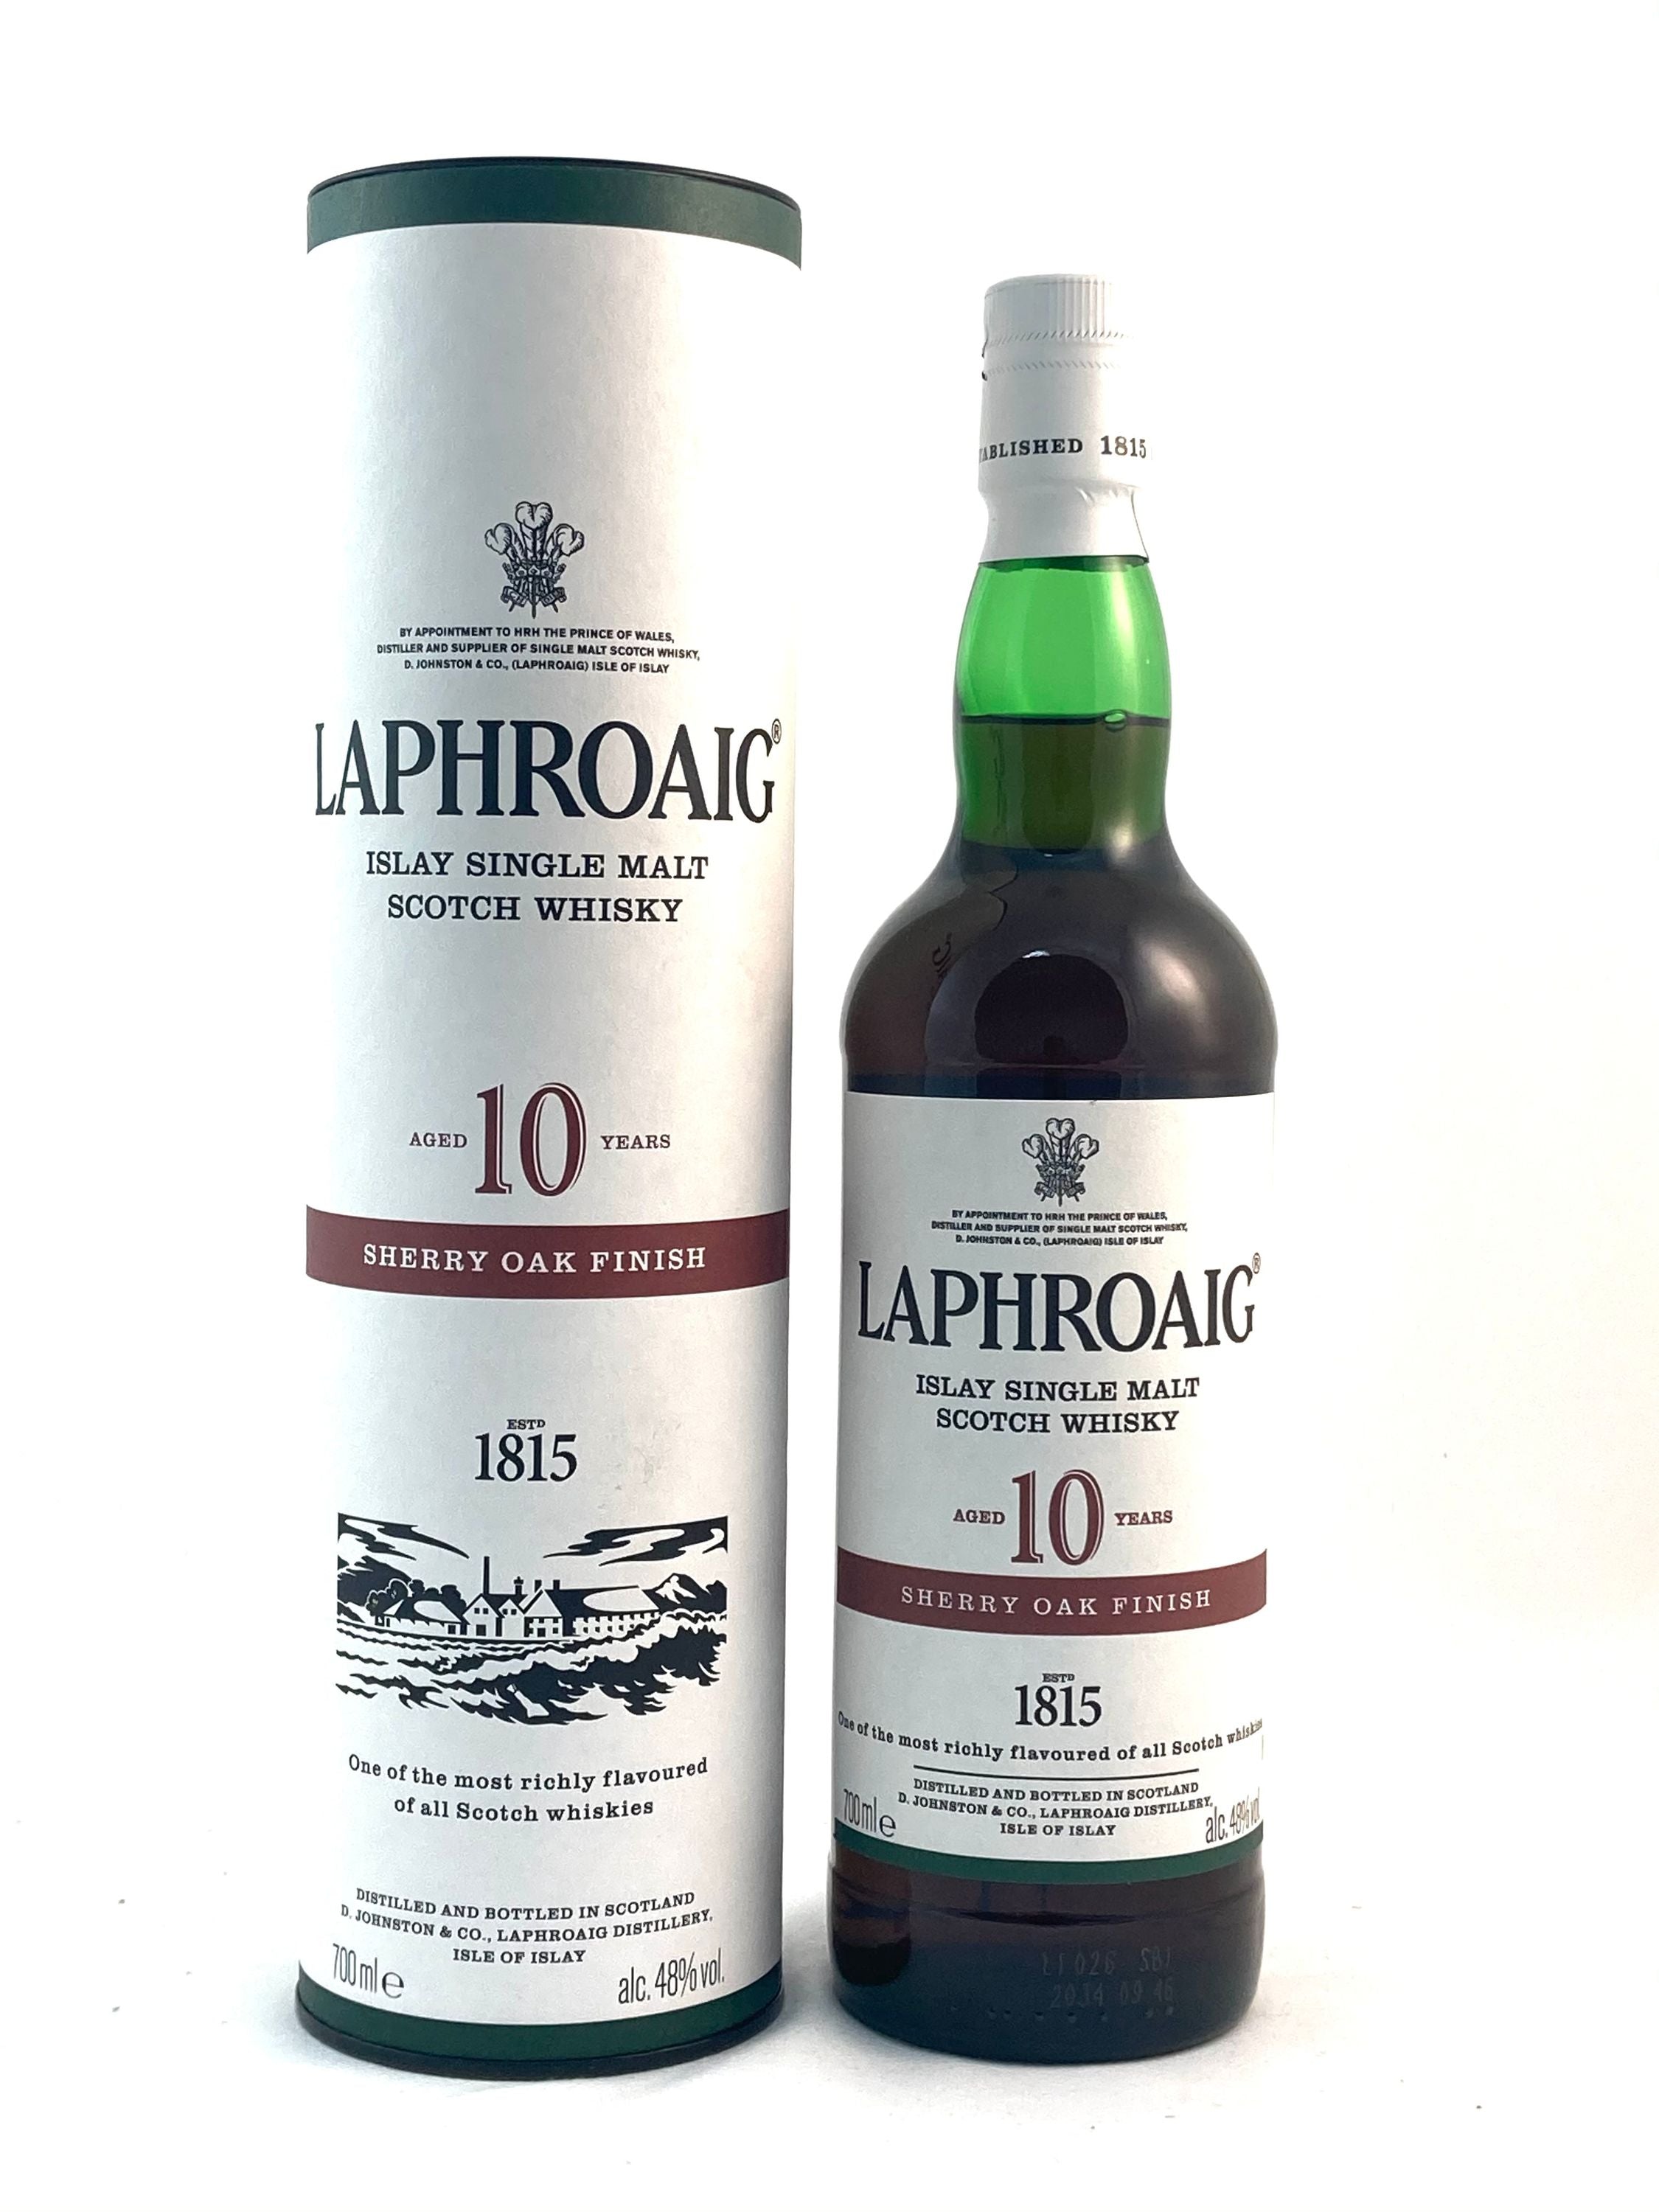 Laphroaig 10 Years Sherry Oak Finish Islay Single Malt Whisky, 0.7l, alc. 48% by volume